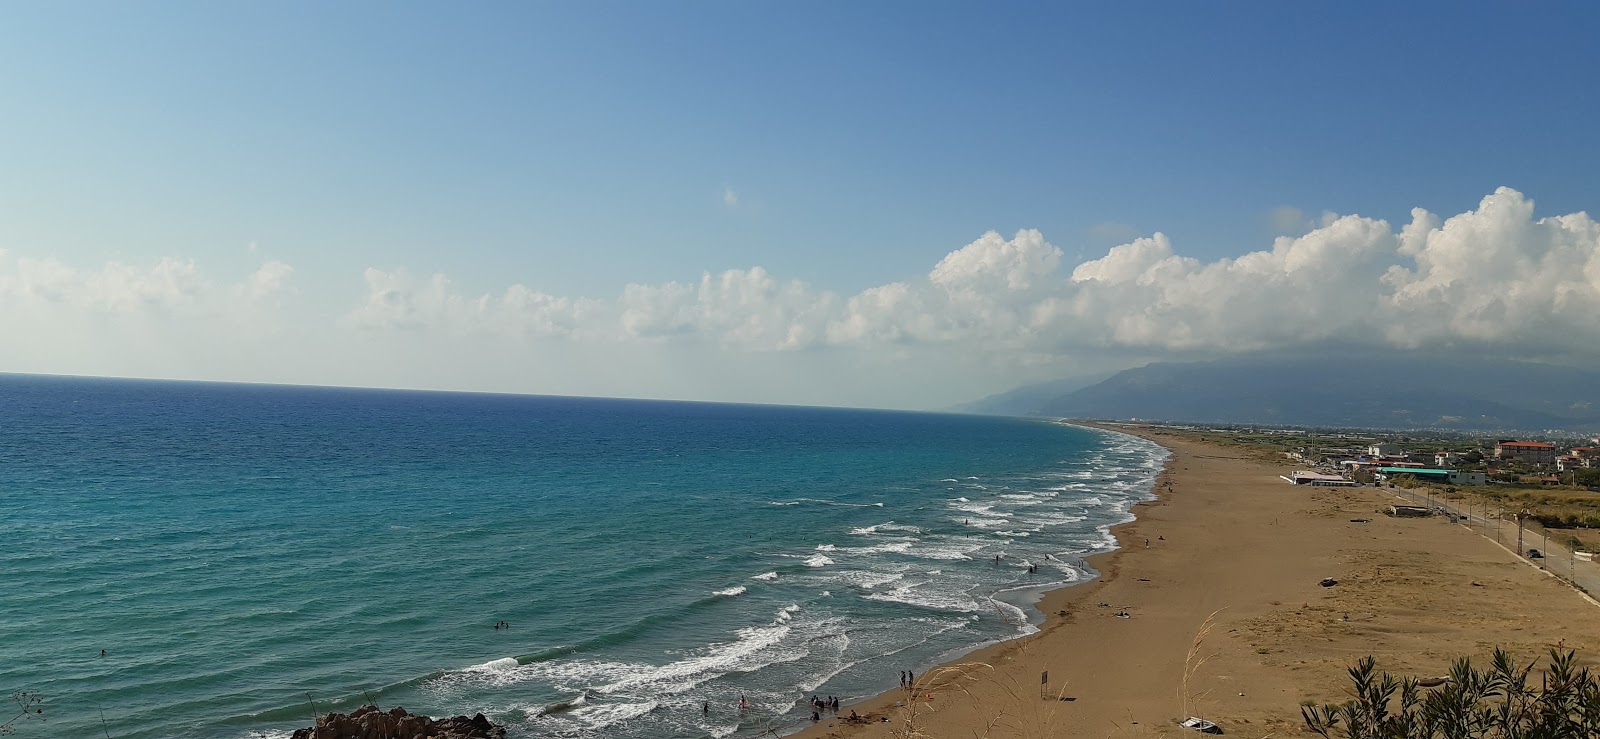 Fotografija Meydan beach obkrožen z gorami